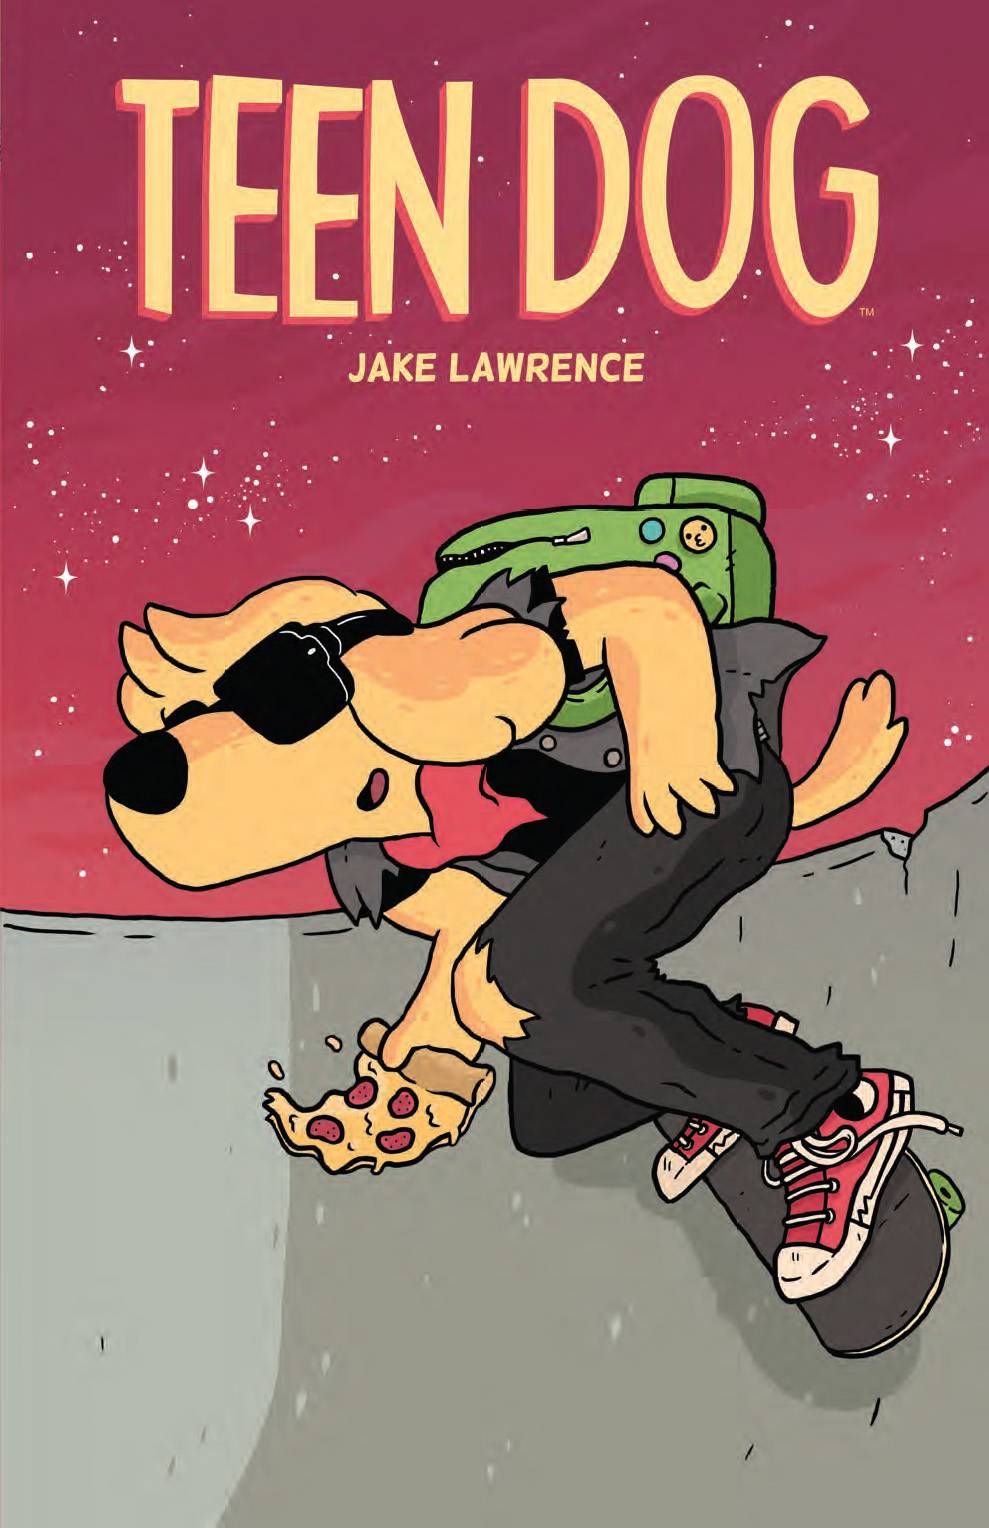 Teen Dog Graphic Novel